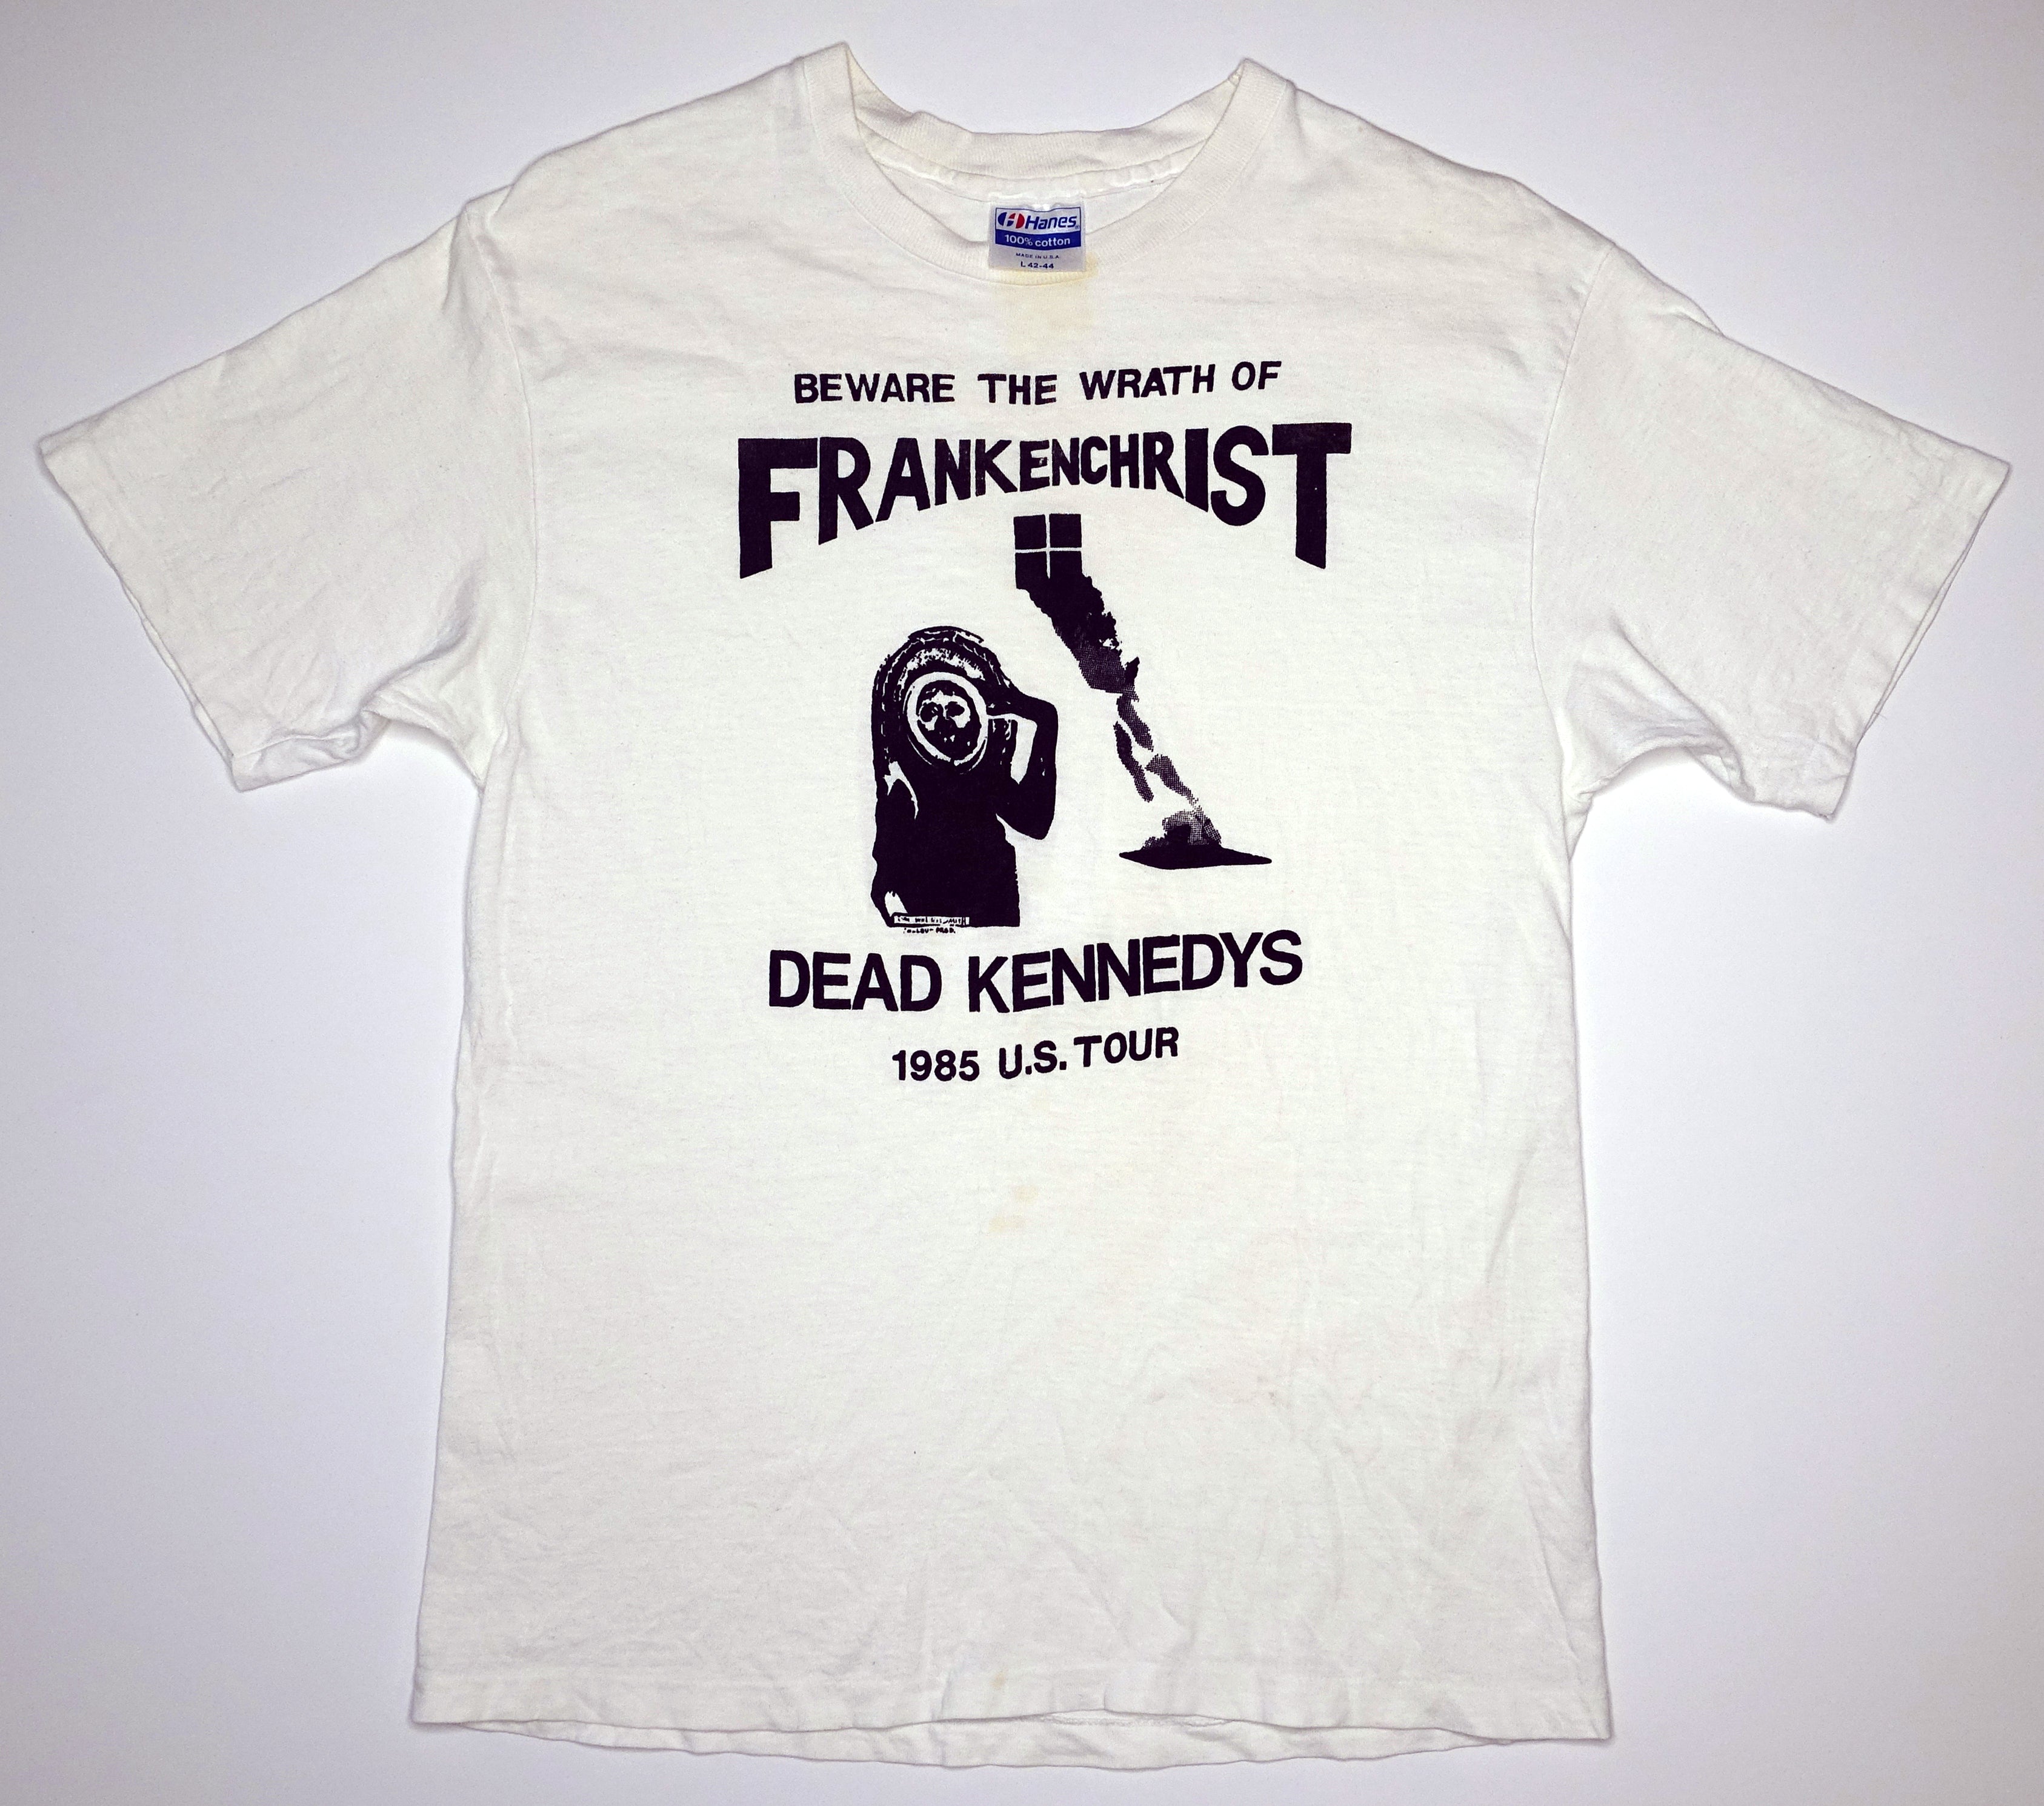 Dead Kennedys - Frankenchrist 1985 US Tour Shirt Size Large